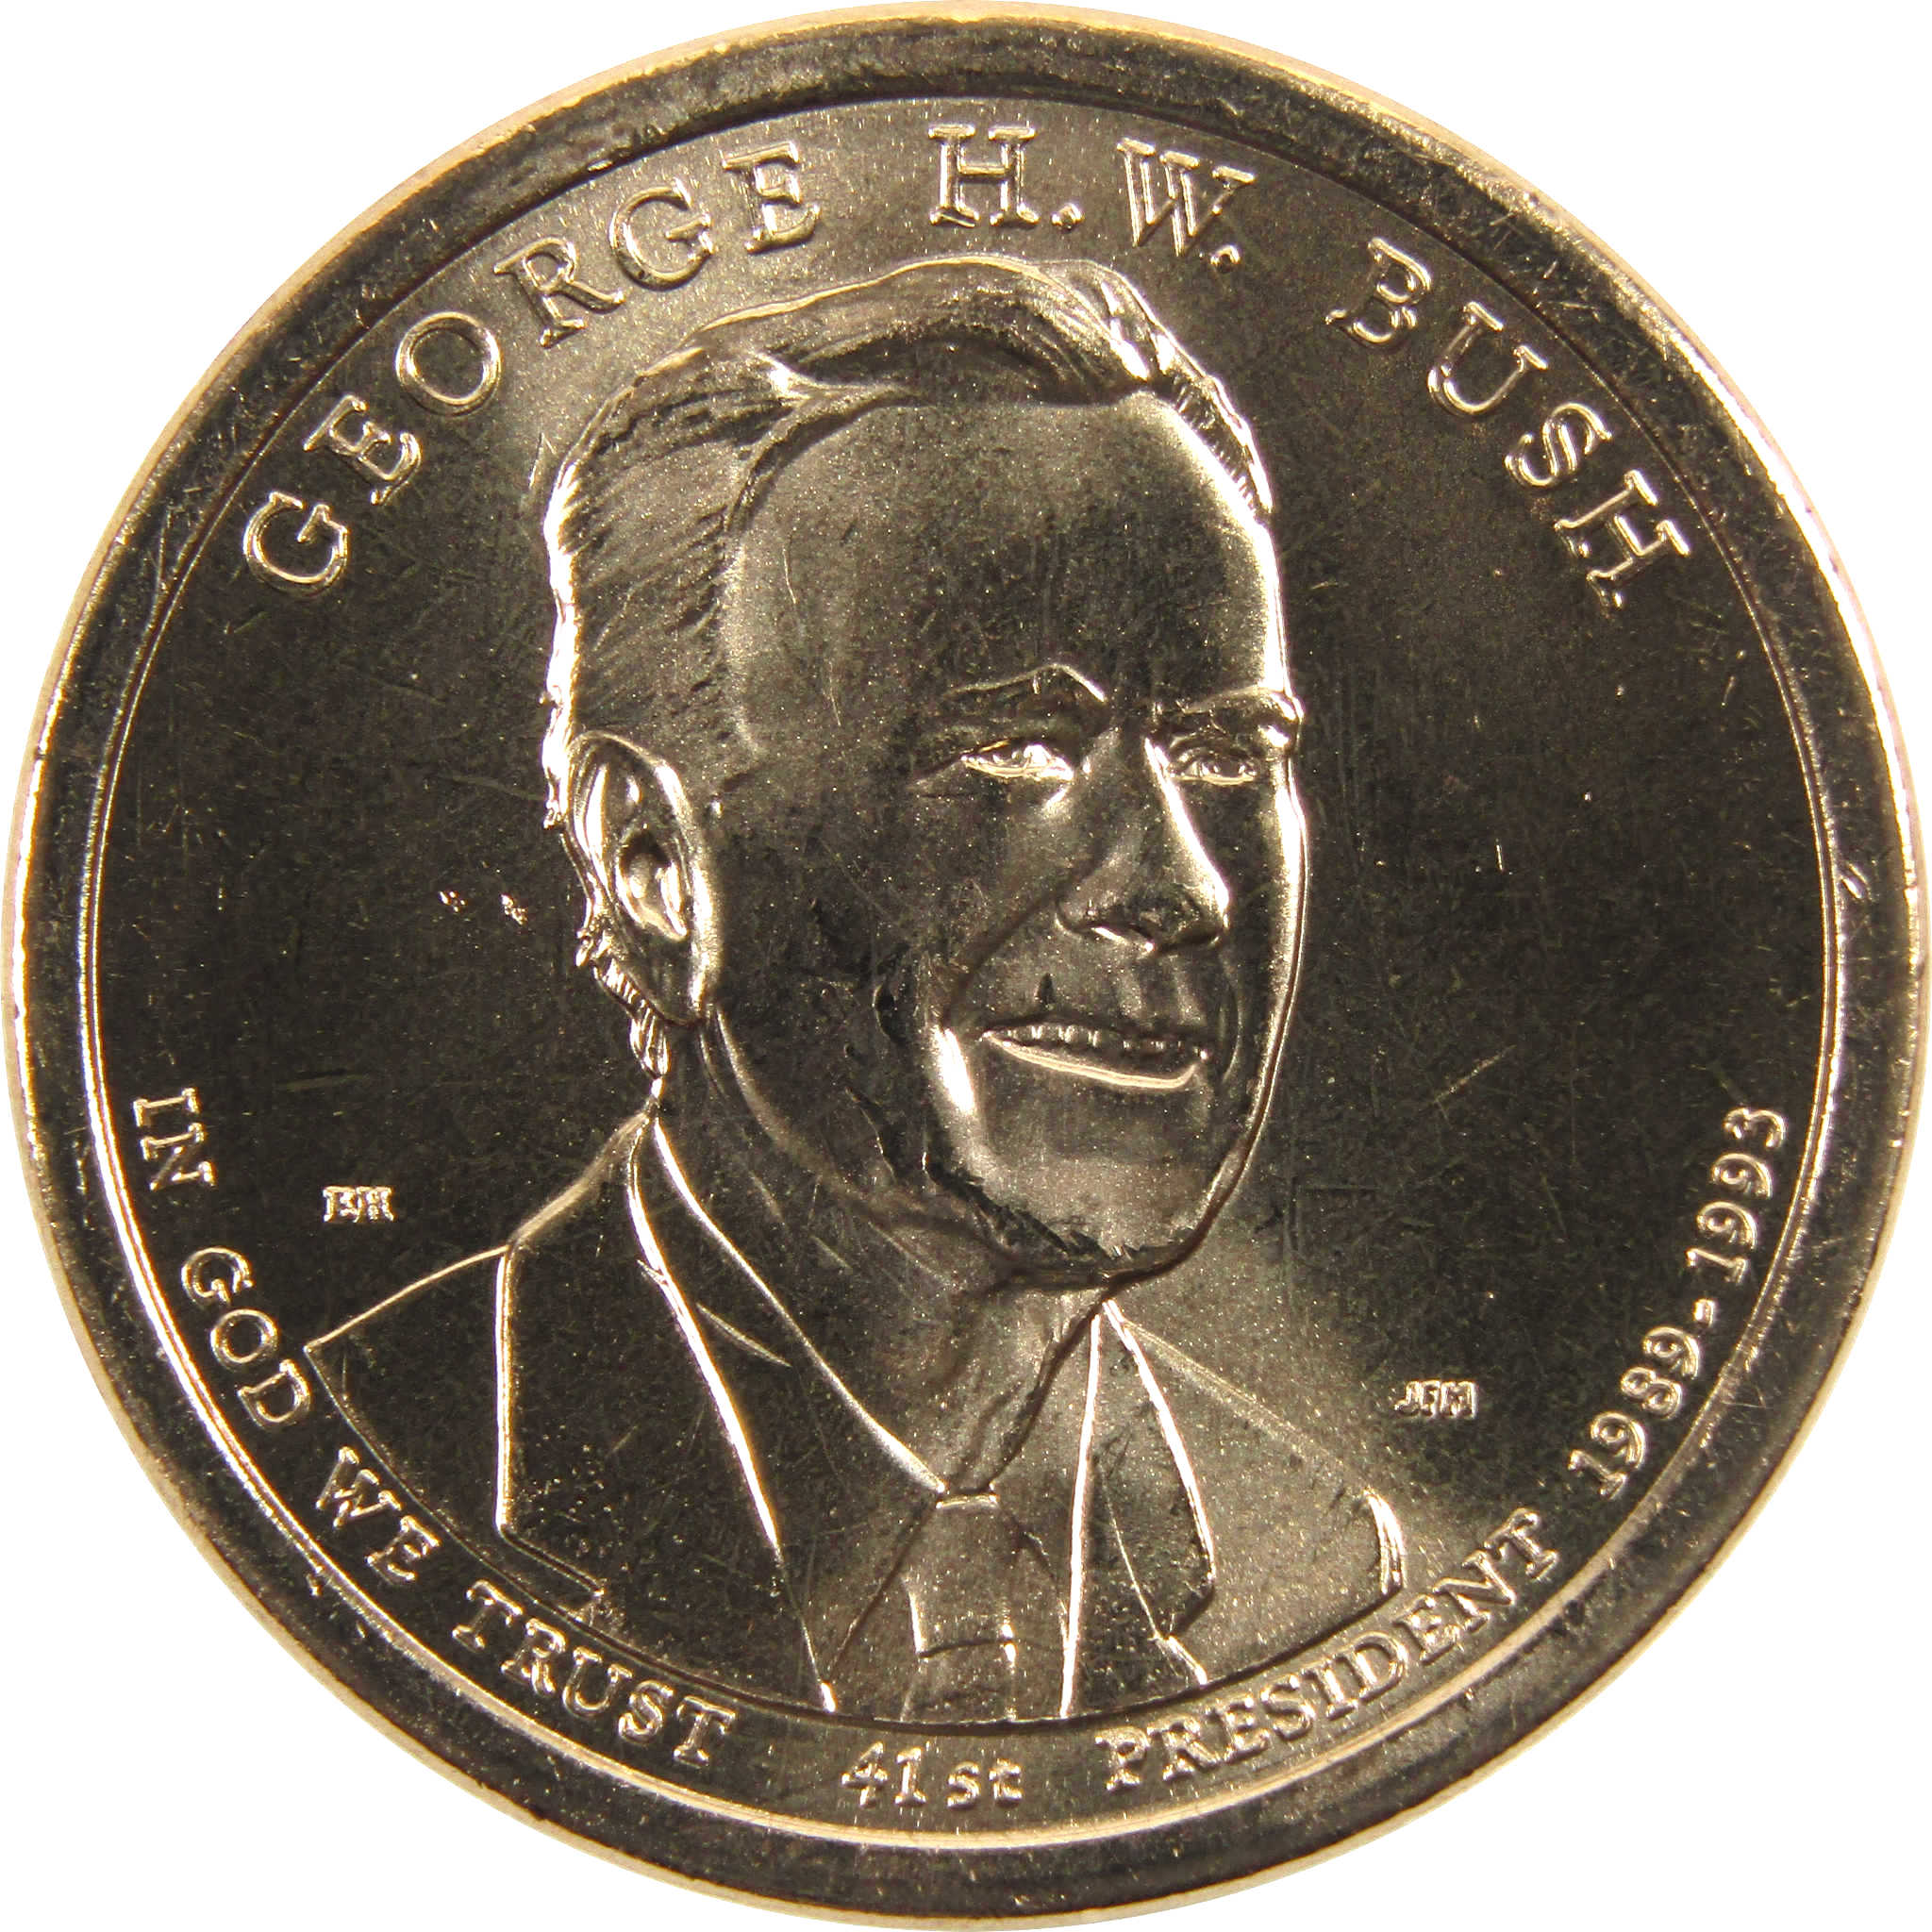 2020 P George H W Bush Presidential Dollar BU Uncirculated $1 Coin